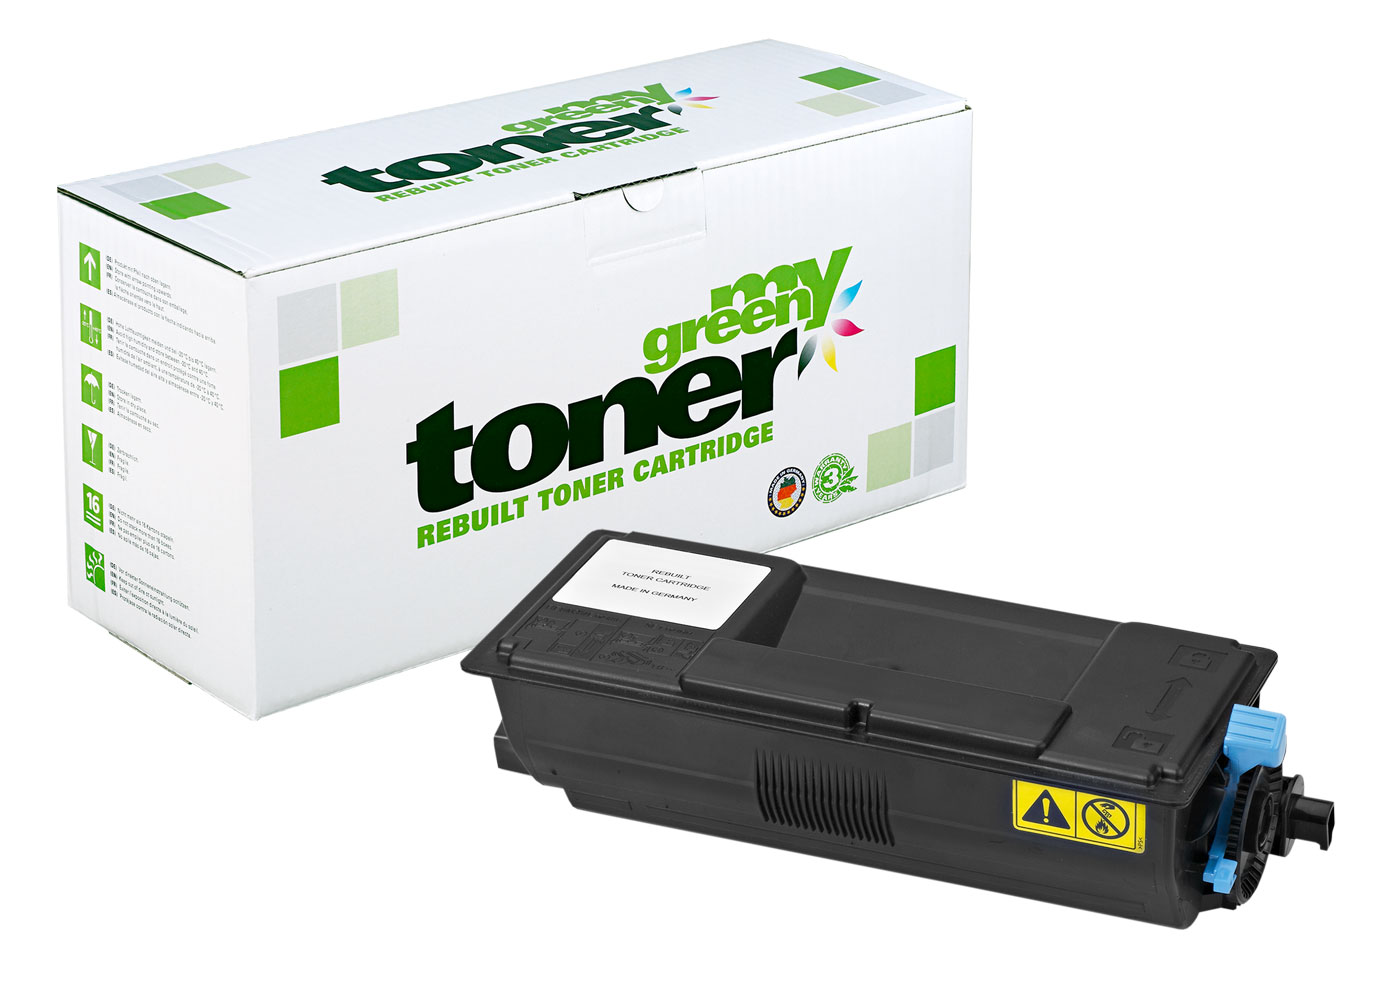 Rebuilt toner cartridge for Kyocera ECOSYS PA4500X